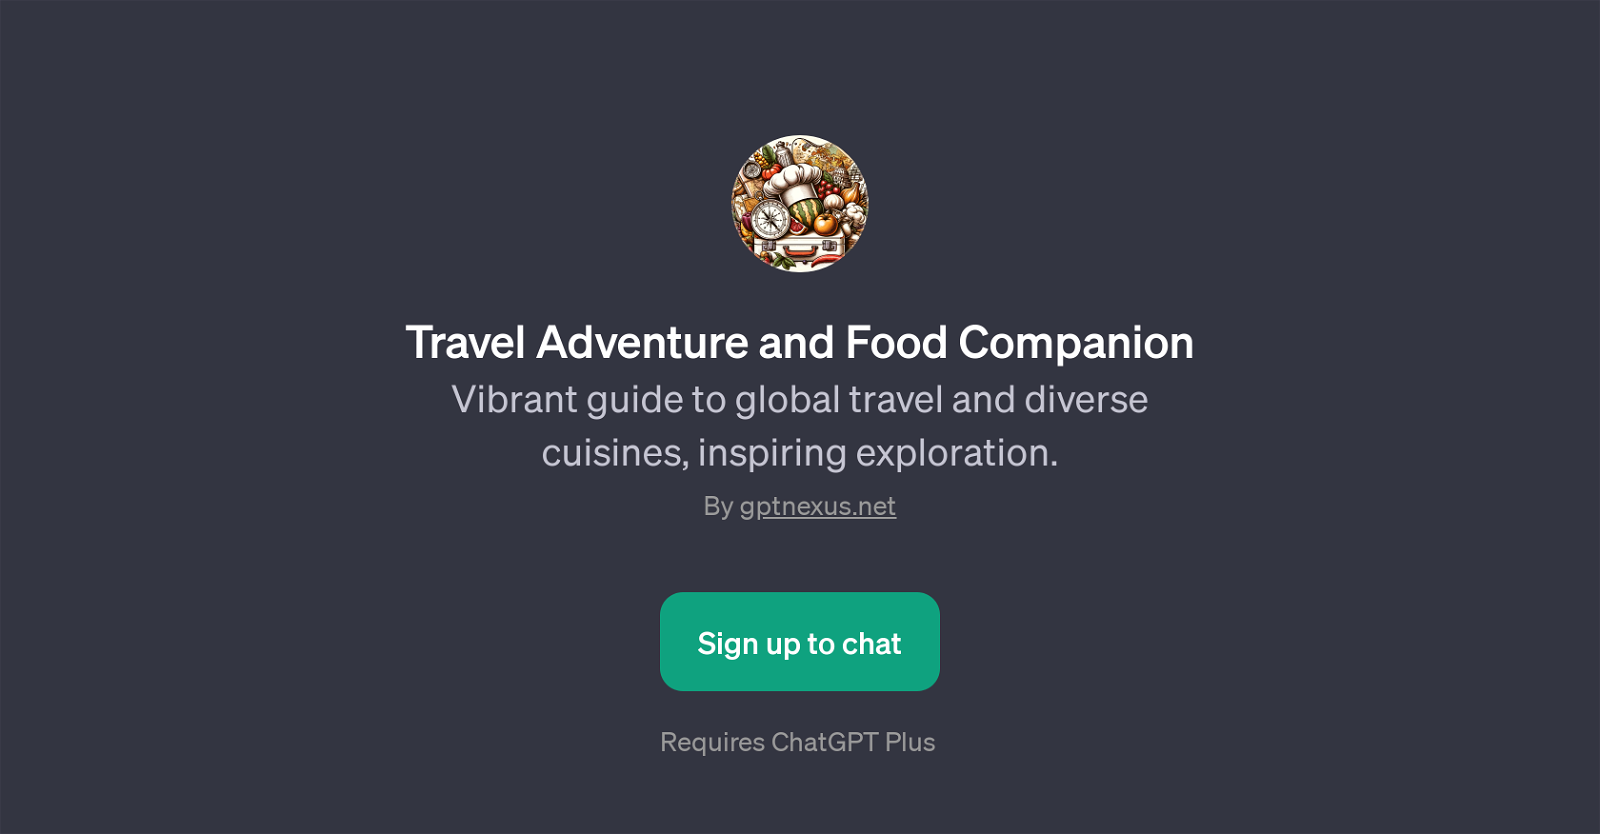 Travel Adventure and Food Companion website